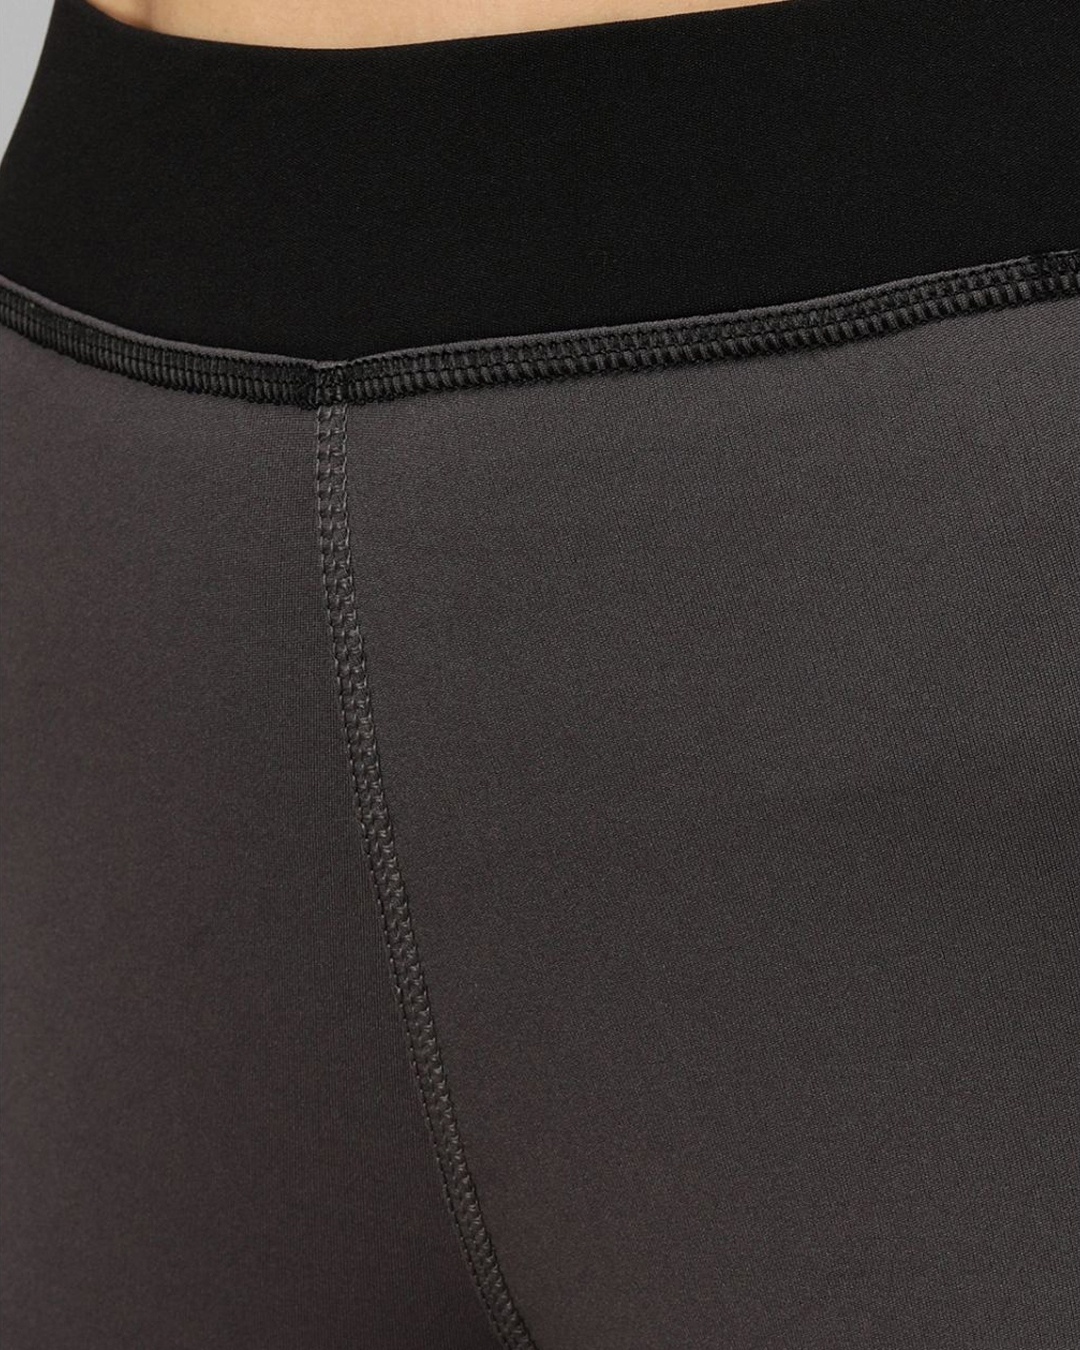 Shop Women's Grey & Black Color Block Skinny Fit Tights